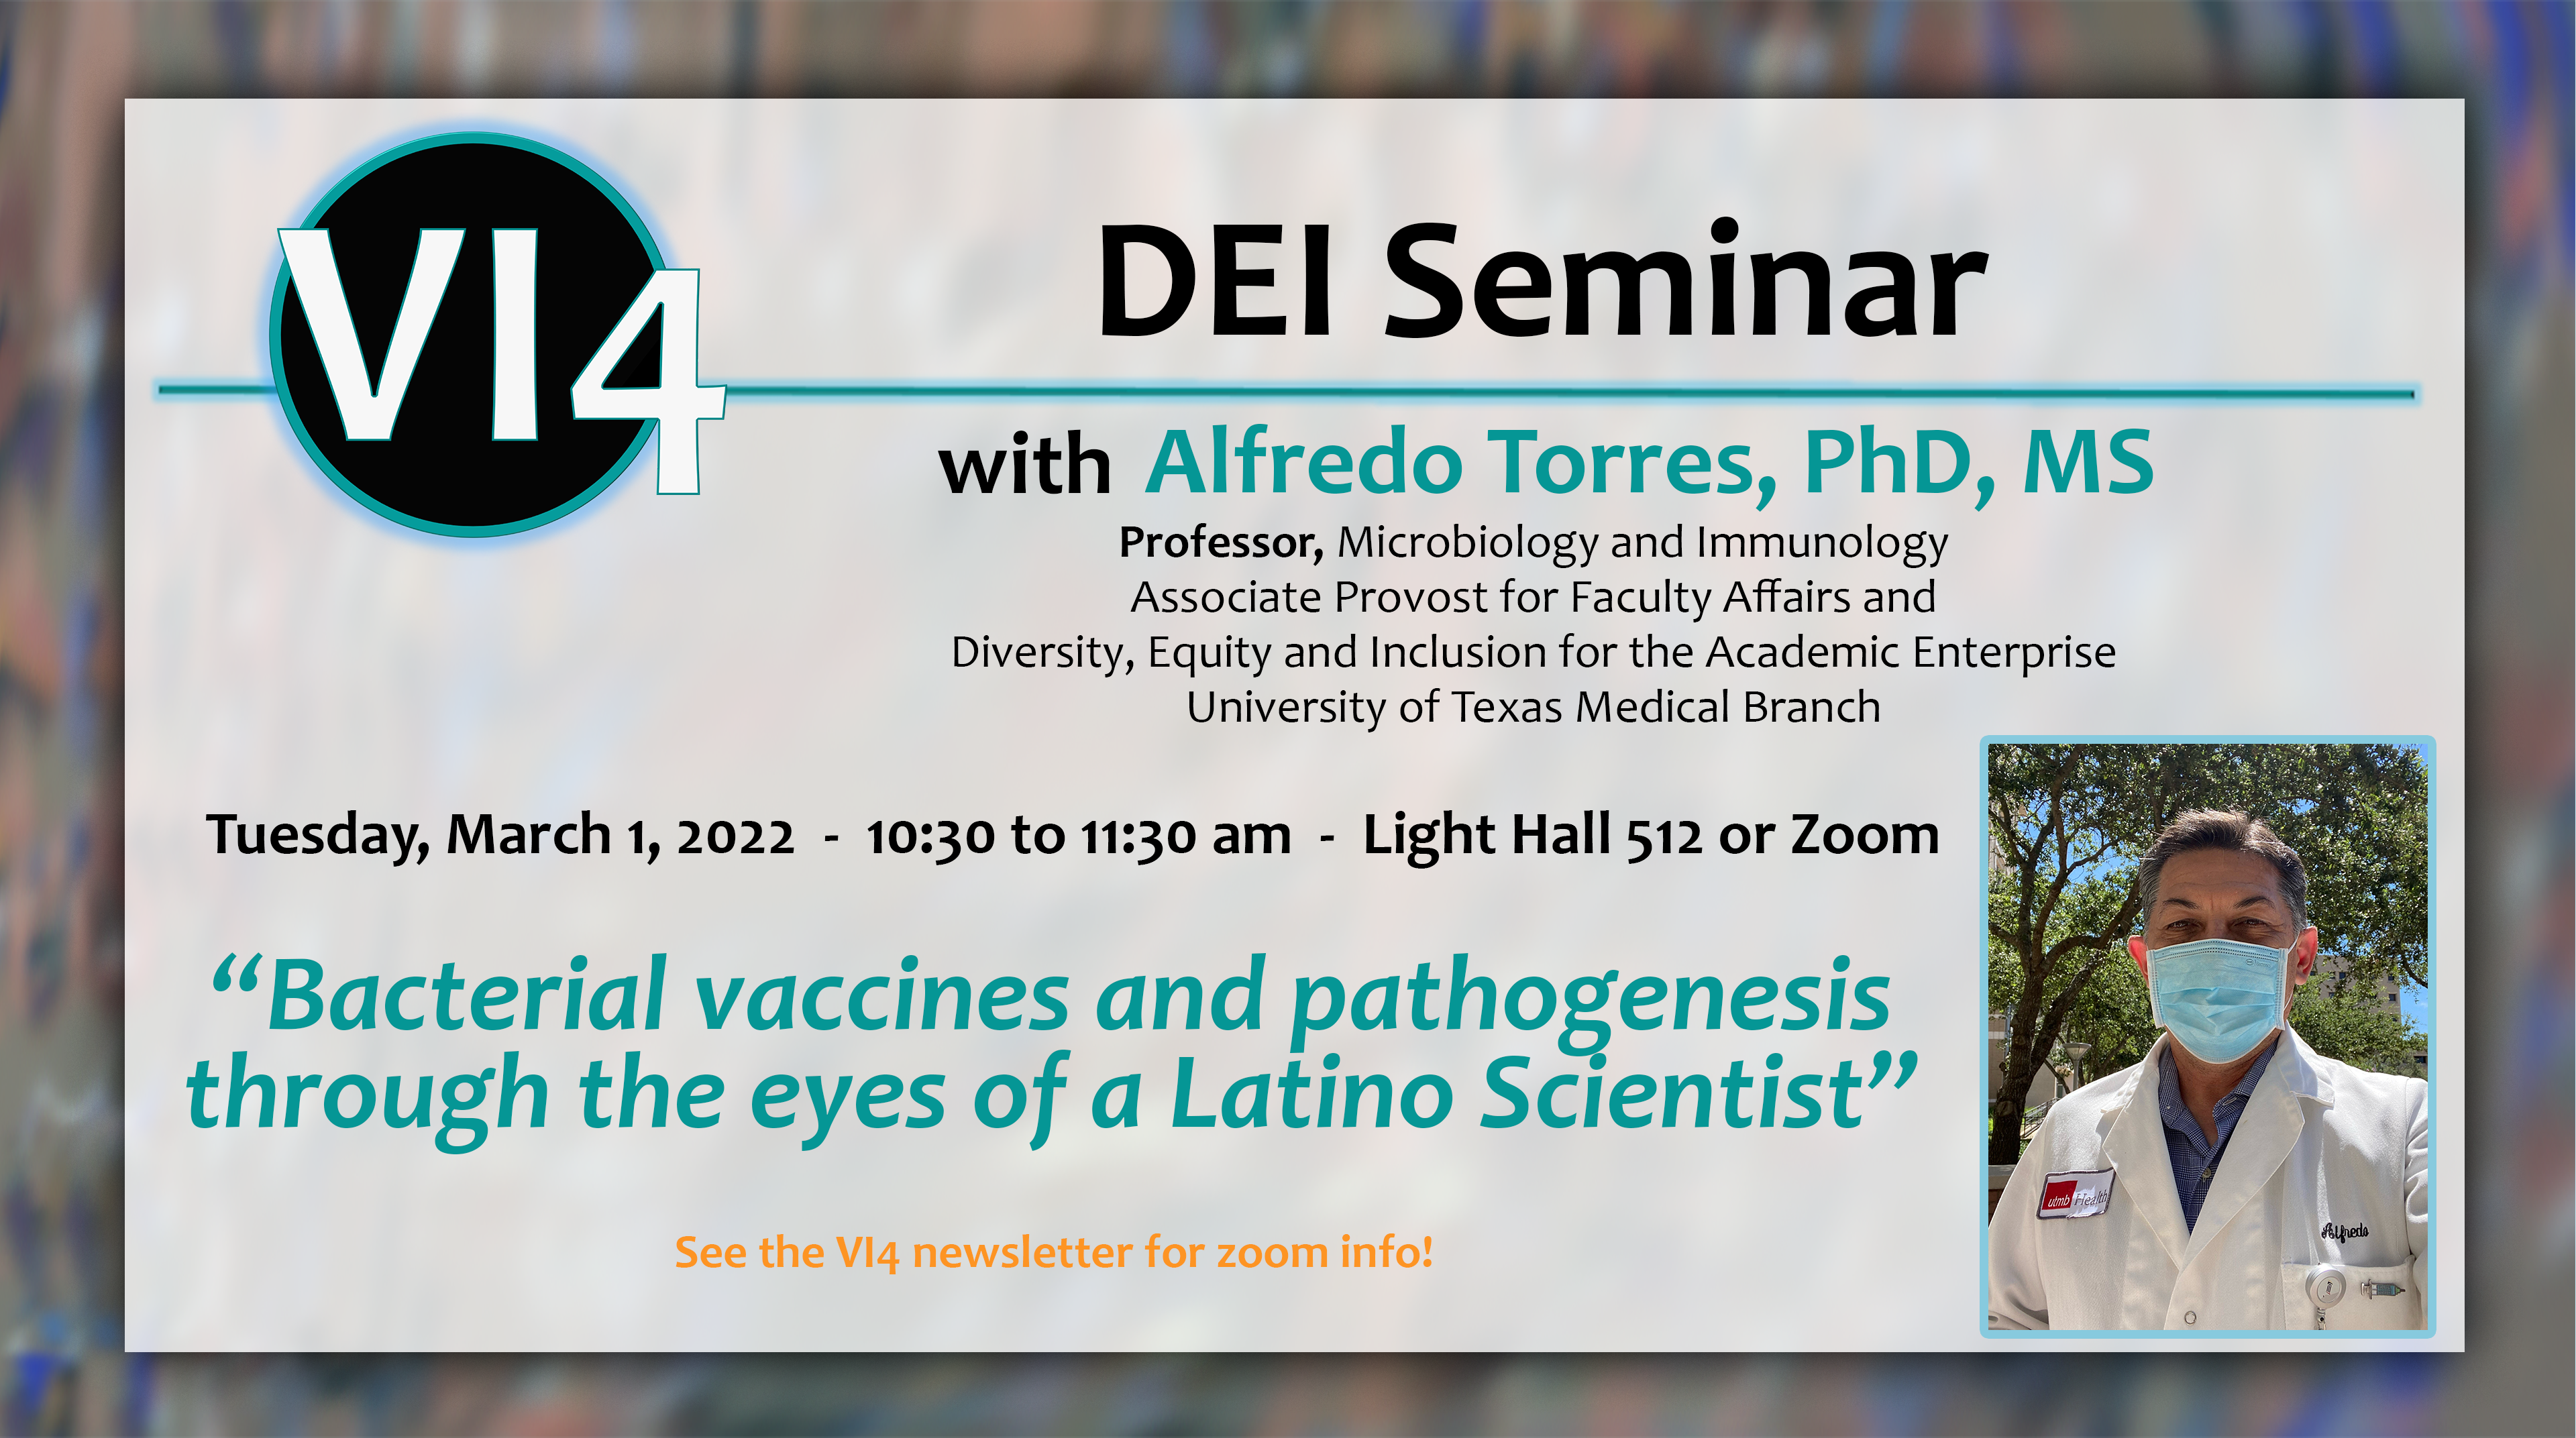 DEI Seminar - Alfred Torres, PhD, MS